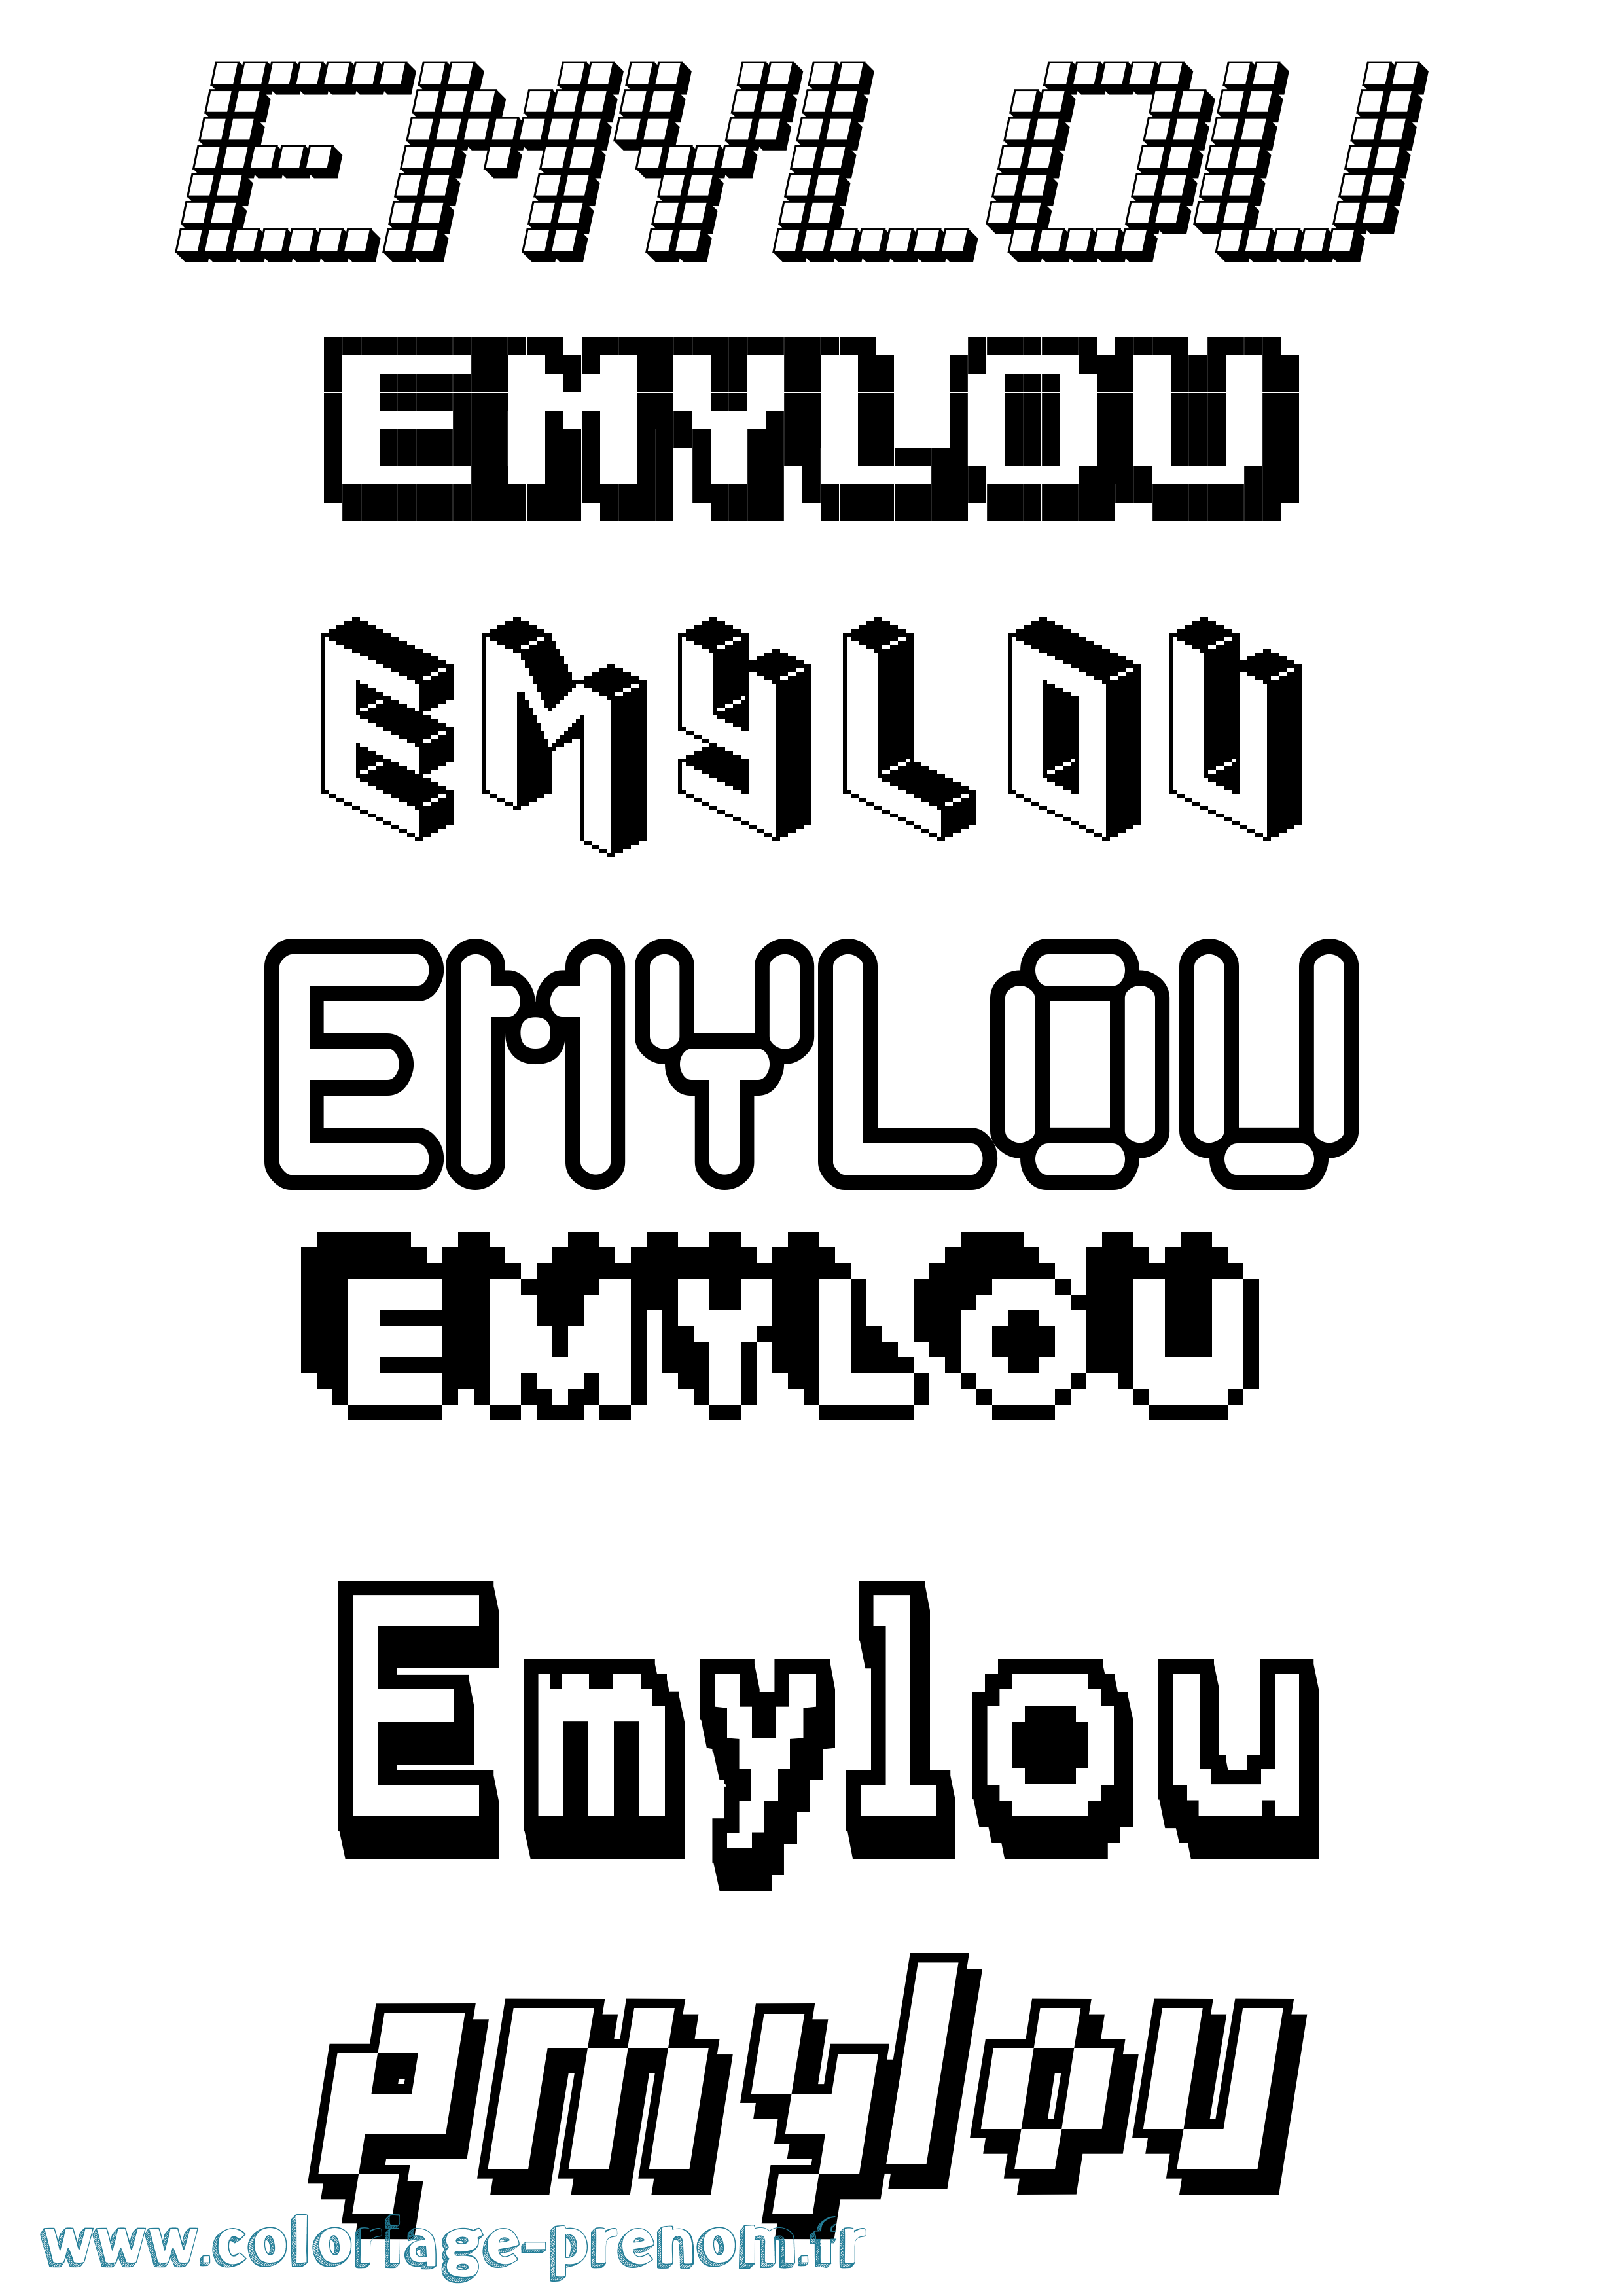 Coloriage prénom Emylou Pixel